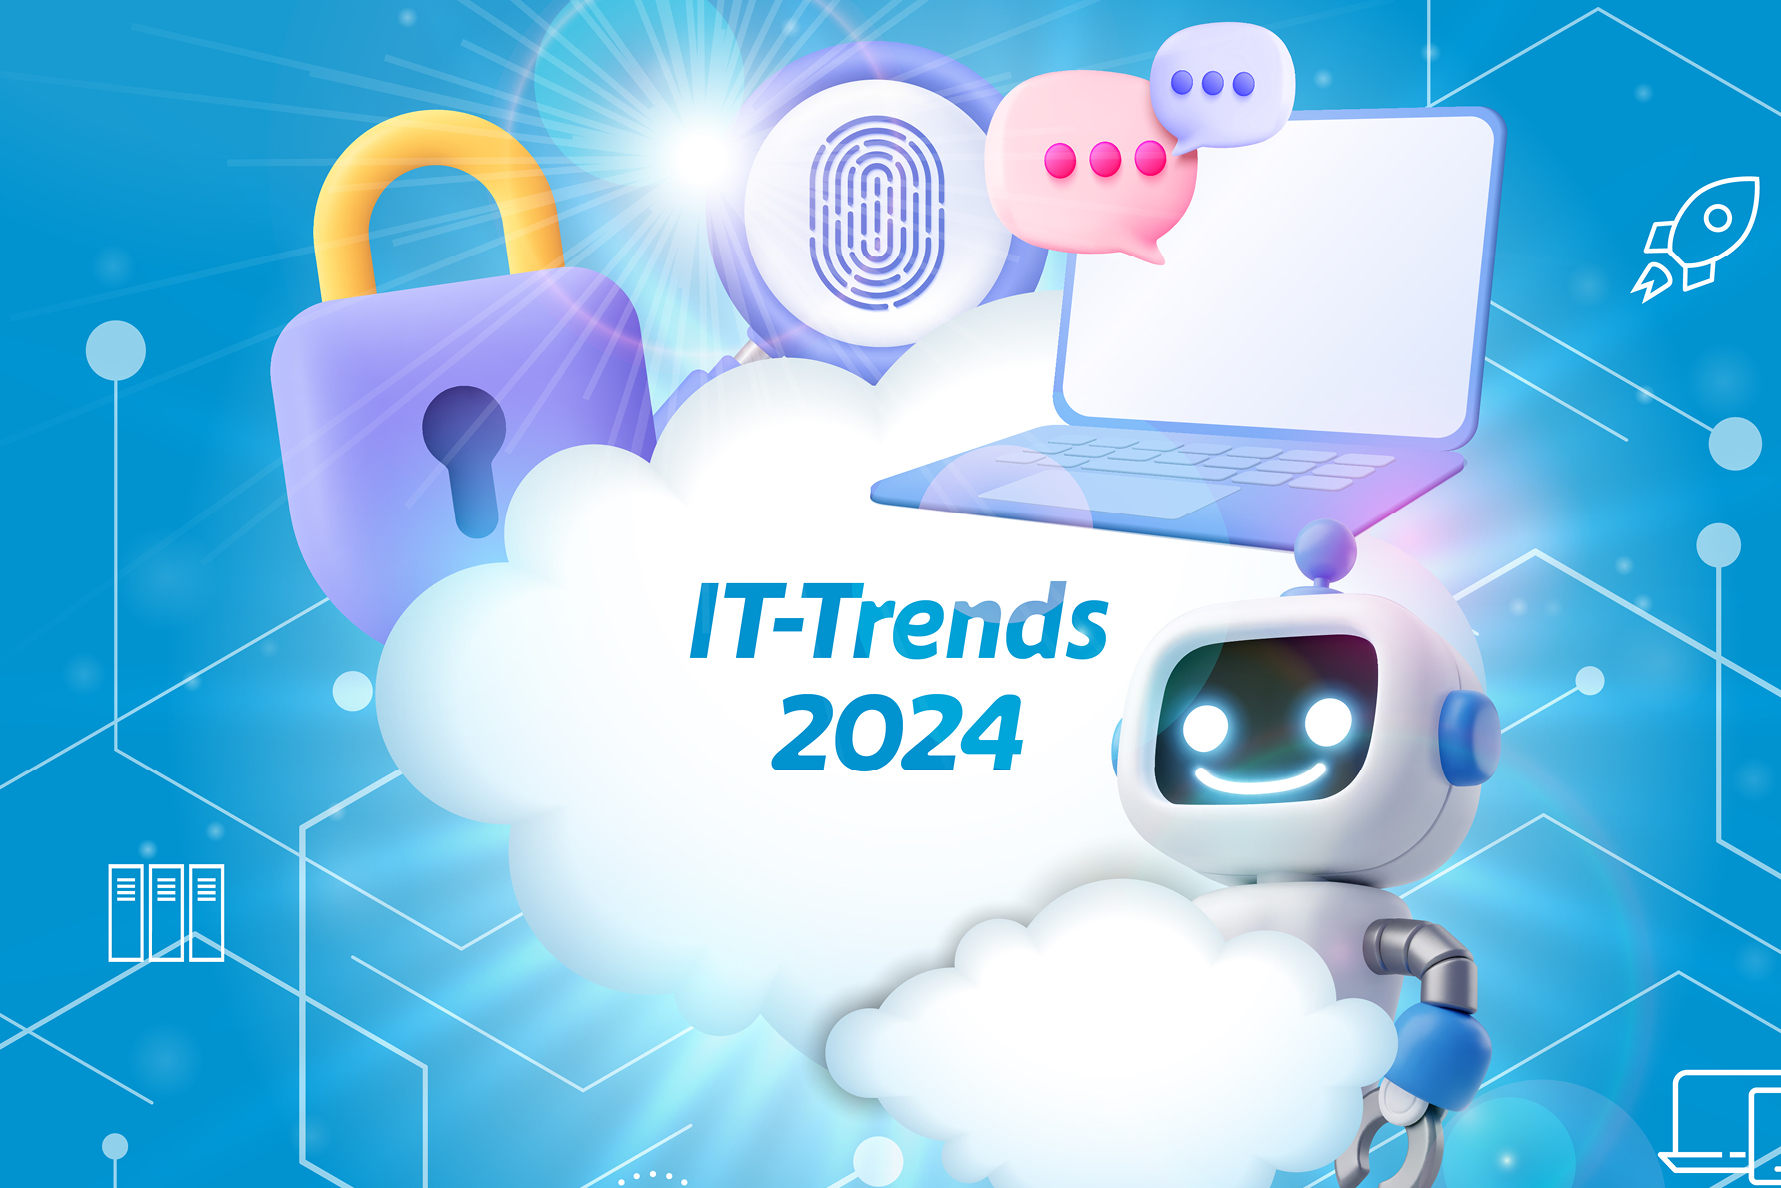 IT-Trends 2024